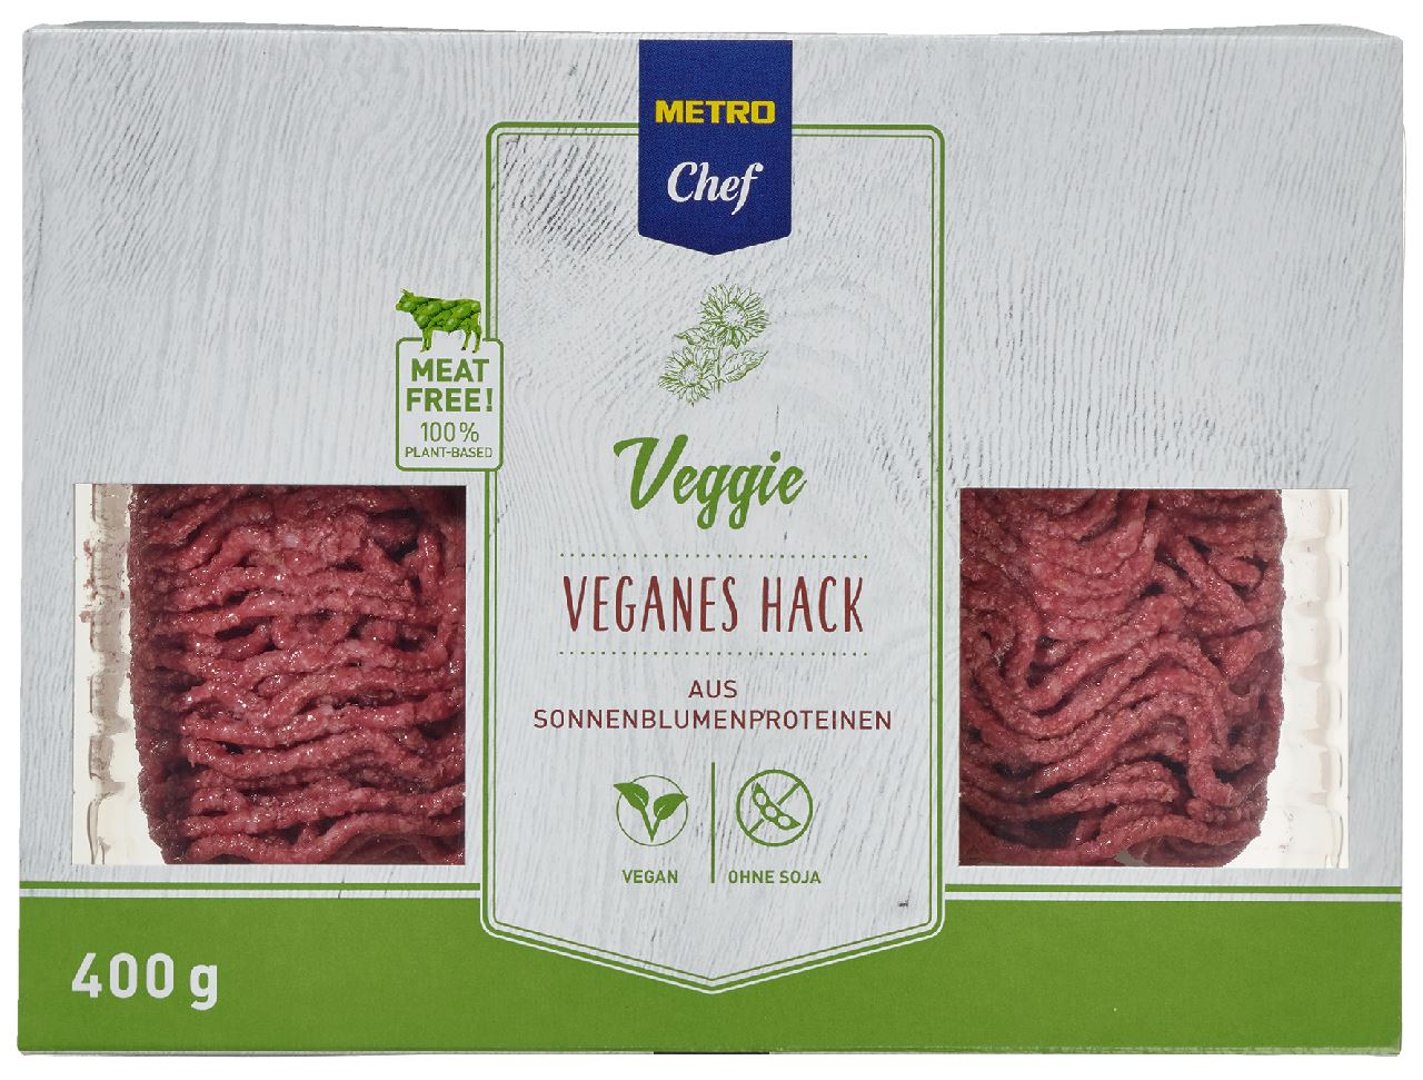 METRO Chef - Veganes Hack gekühlt - 400 g Packung